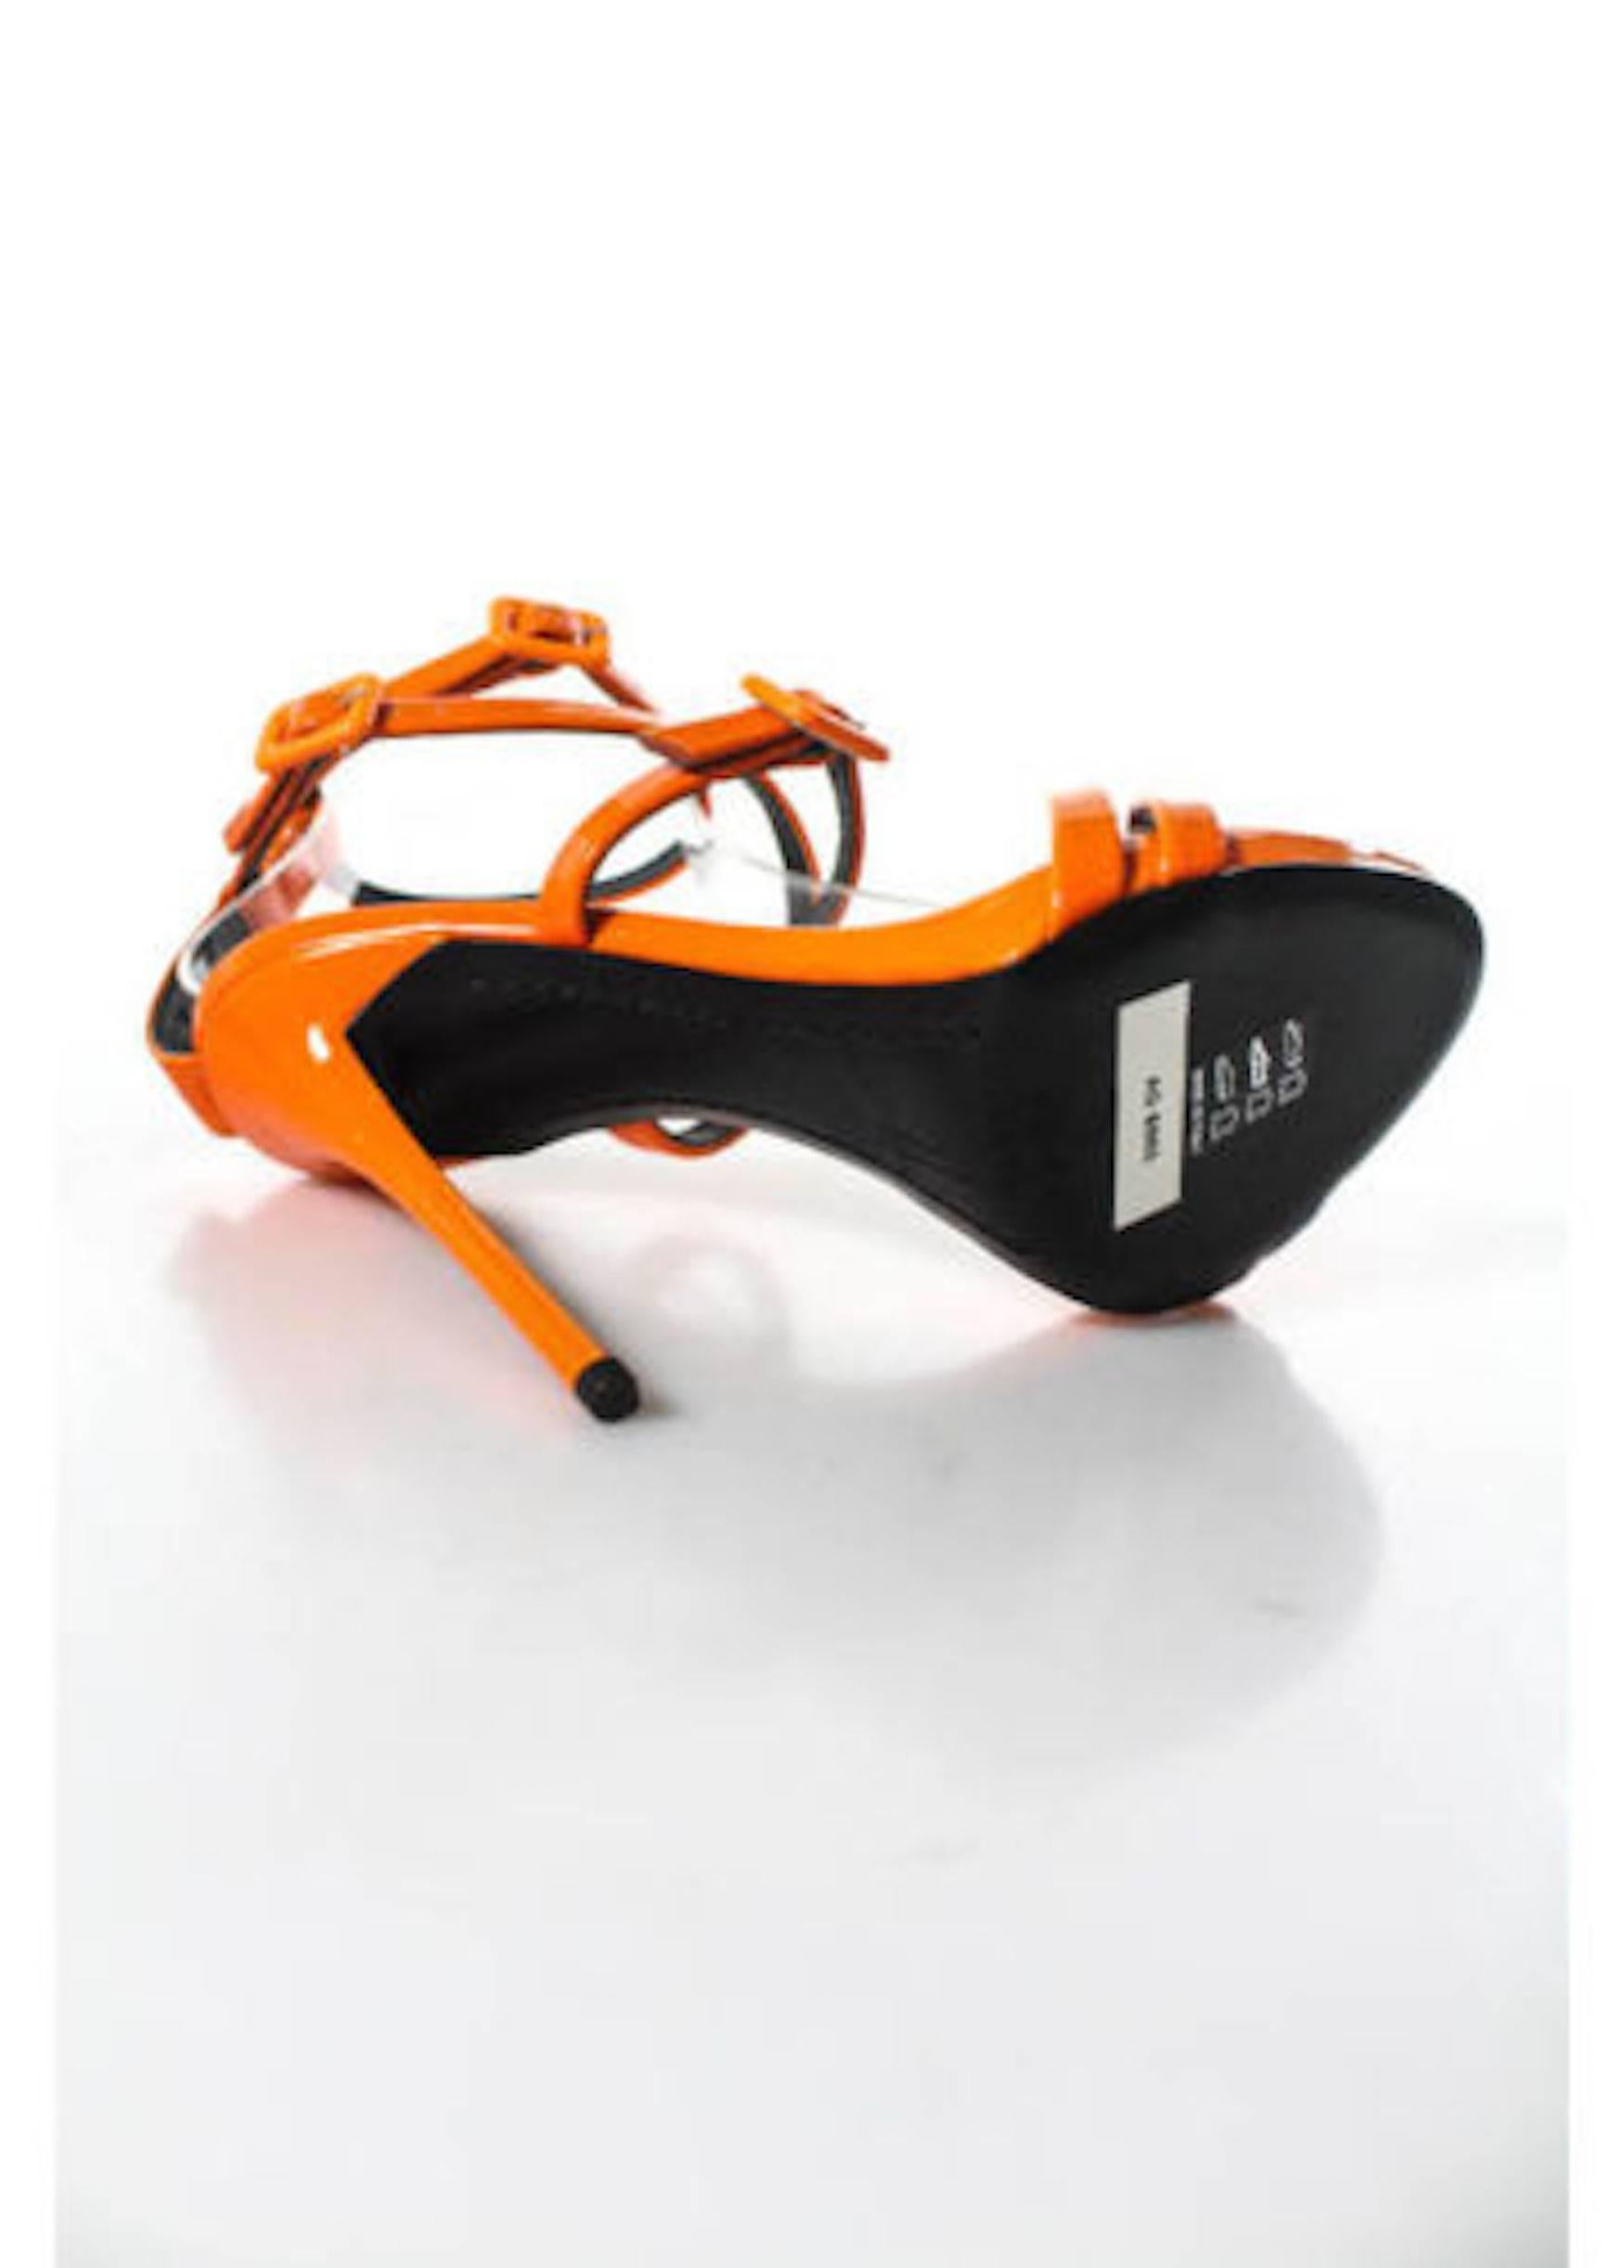 Giuseppe Zanotti Brand New Orange Patent Leather Strappy Sandals High Heels 1